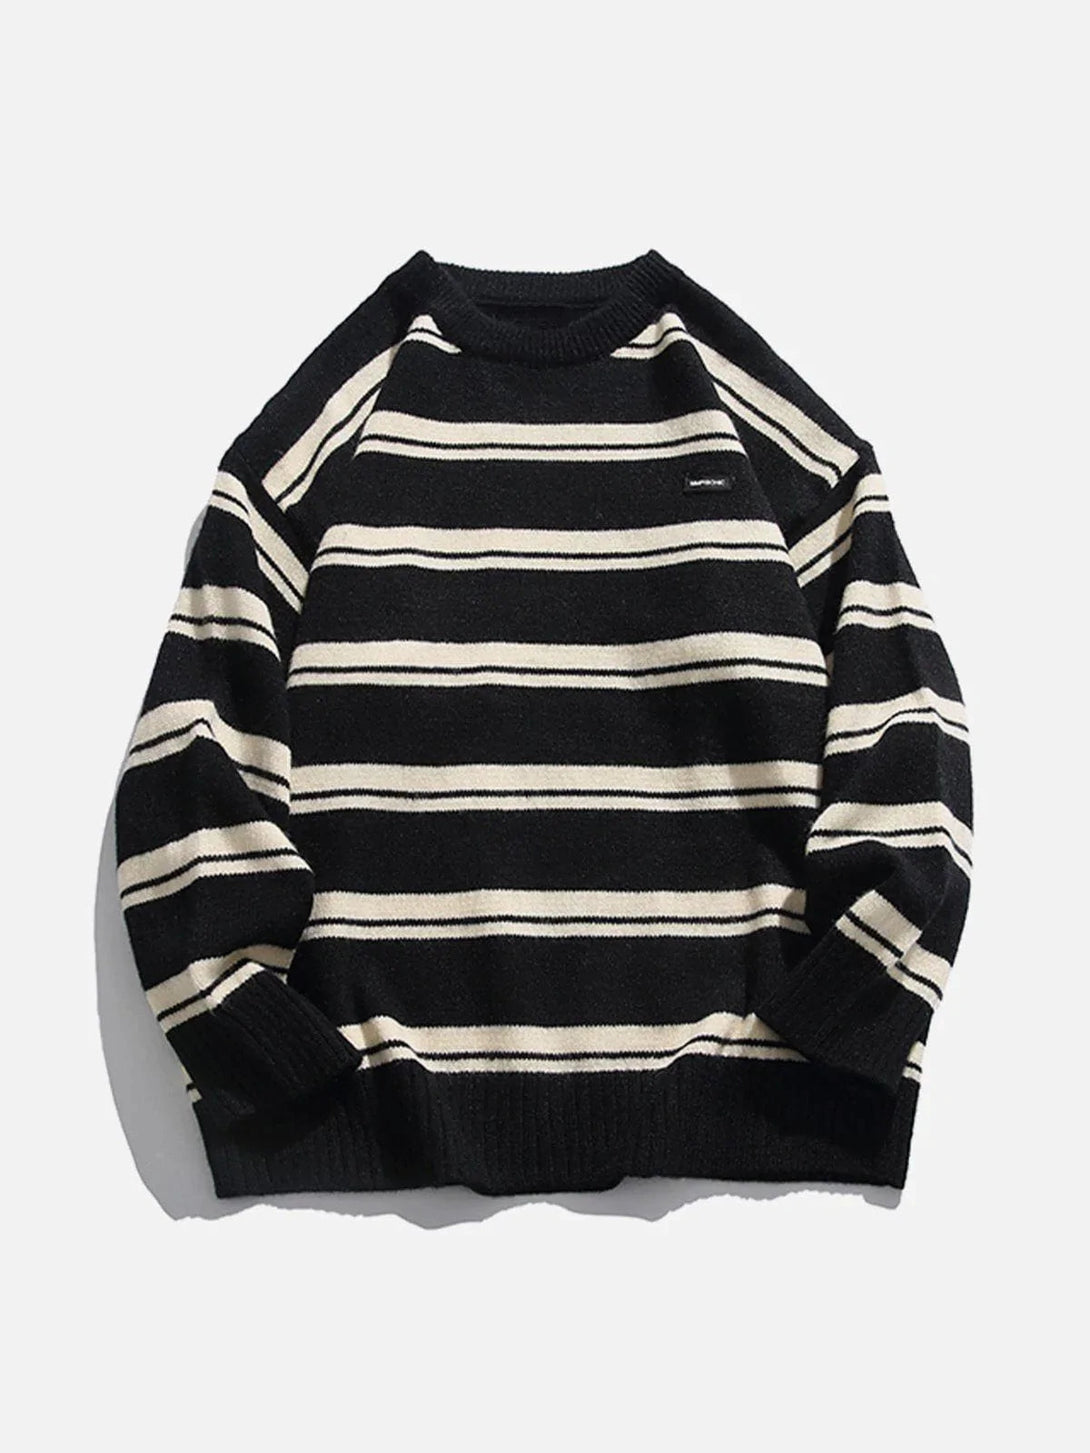 Majesda® - Vintage Stripe Patchwork Sweater outfit ideas streetwear fashion